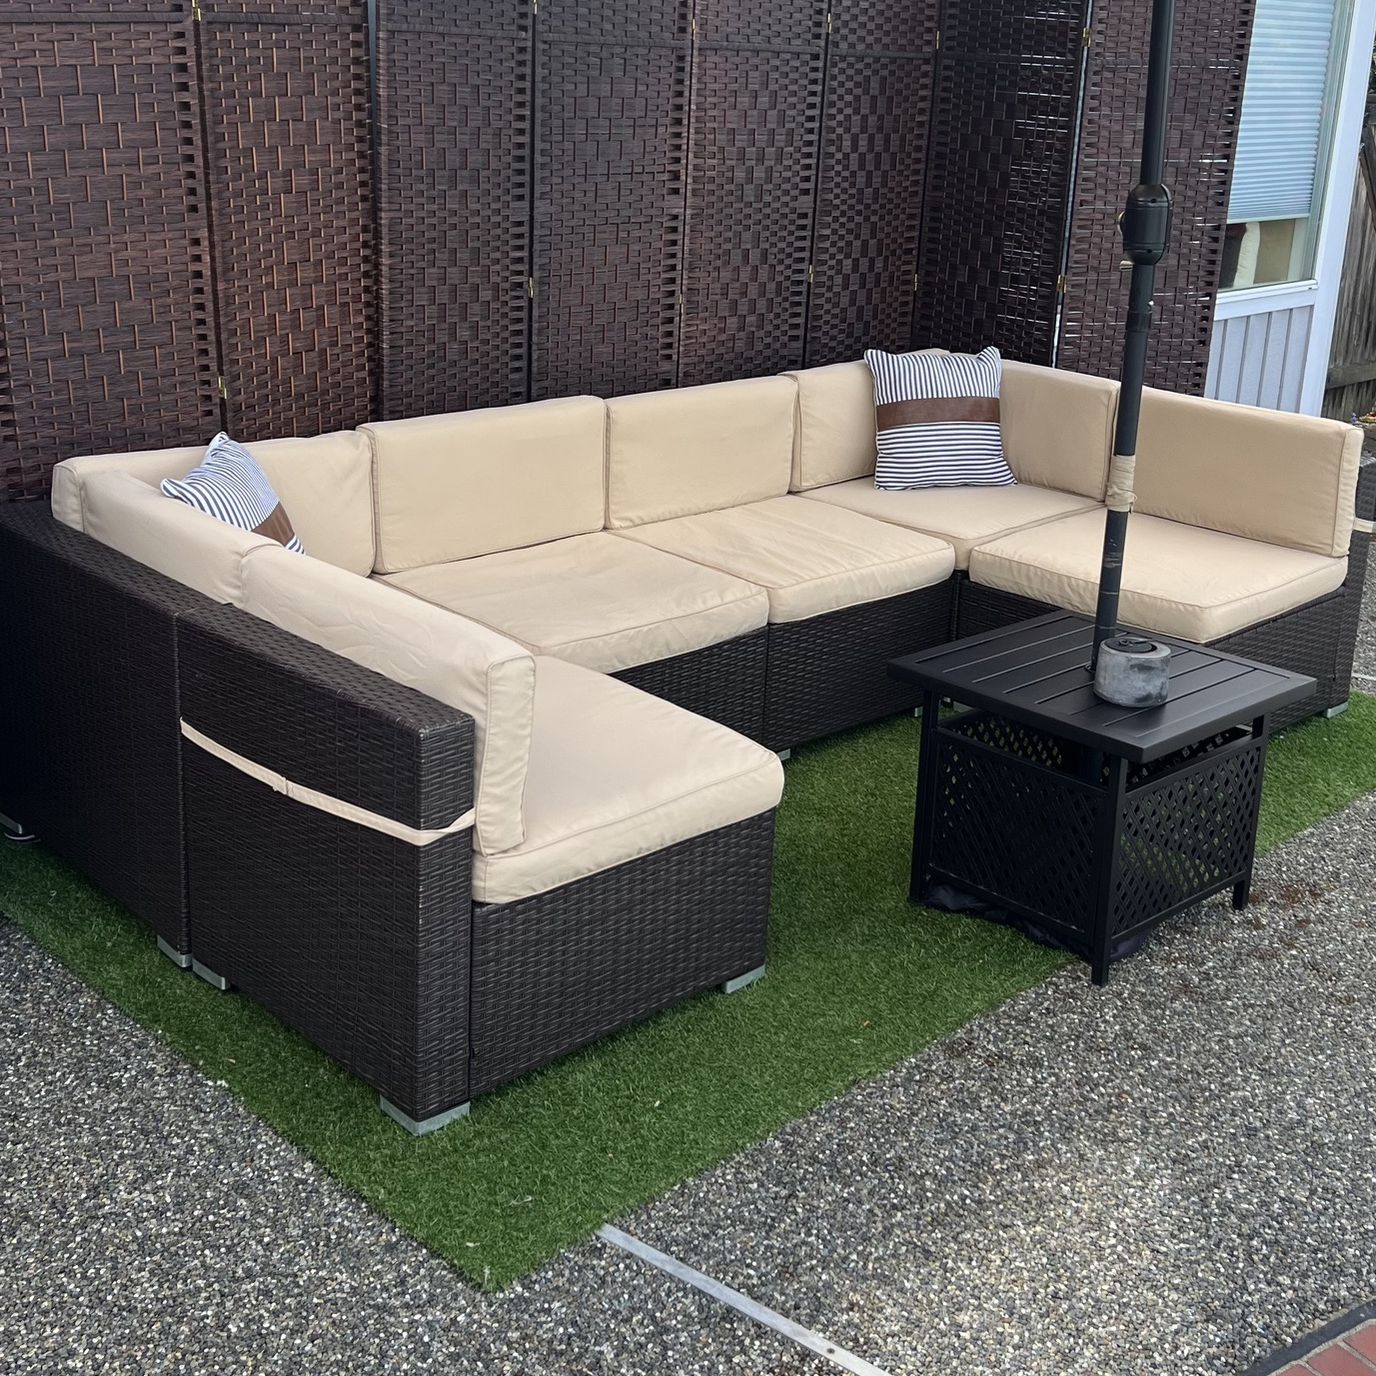 Brown PE Rattan Wicker Outdoor Sofa Couch w/ Tan Khaki Cushions